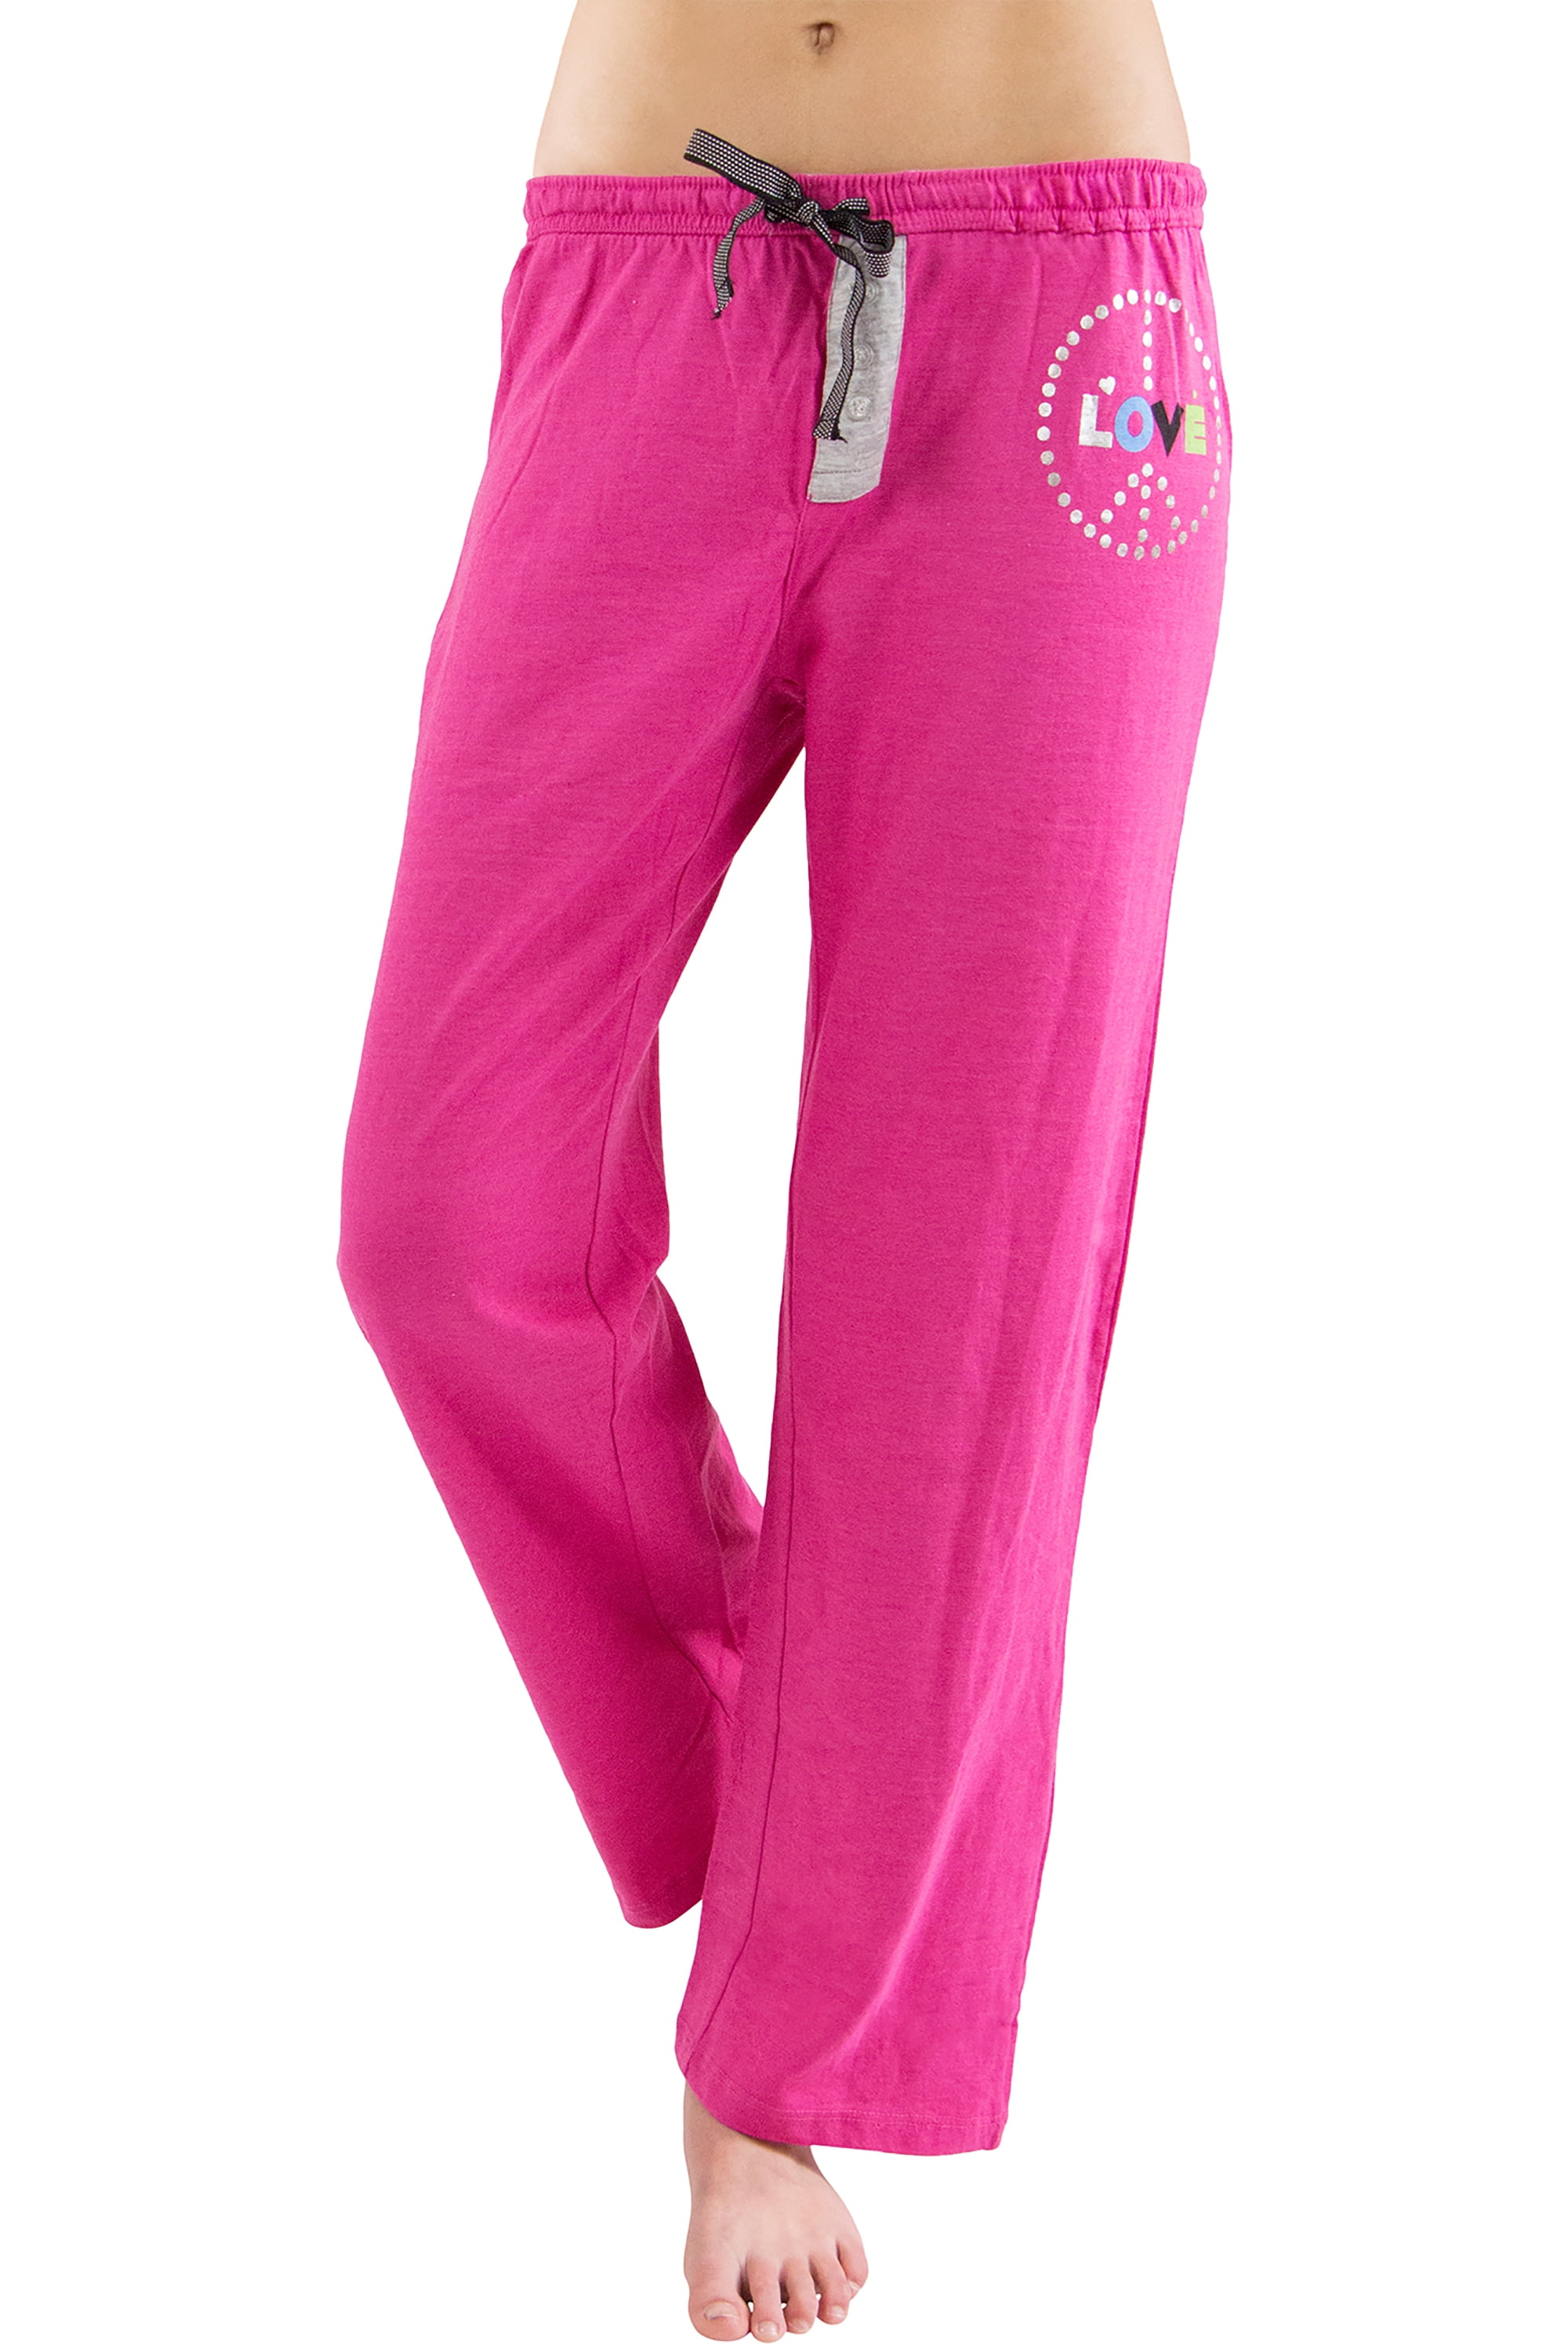 INTIMO Womens Printed Cotton Knit Sleep and Lounge Pants, Pink, Large